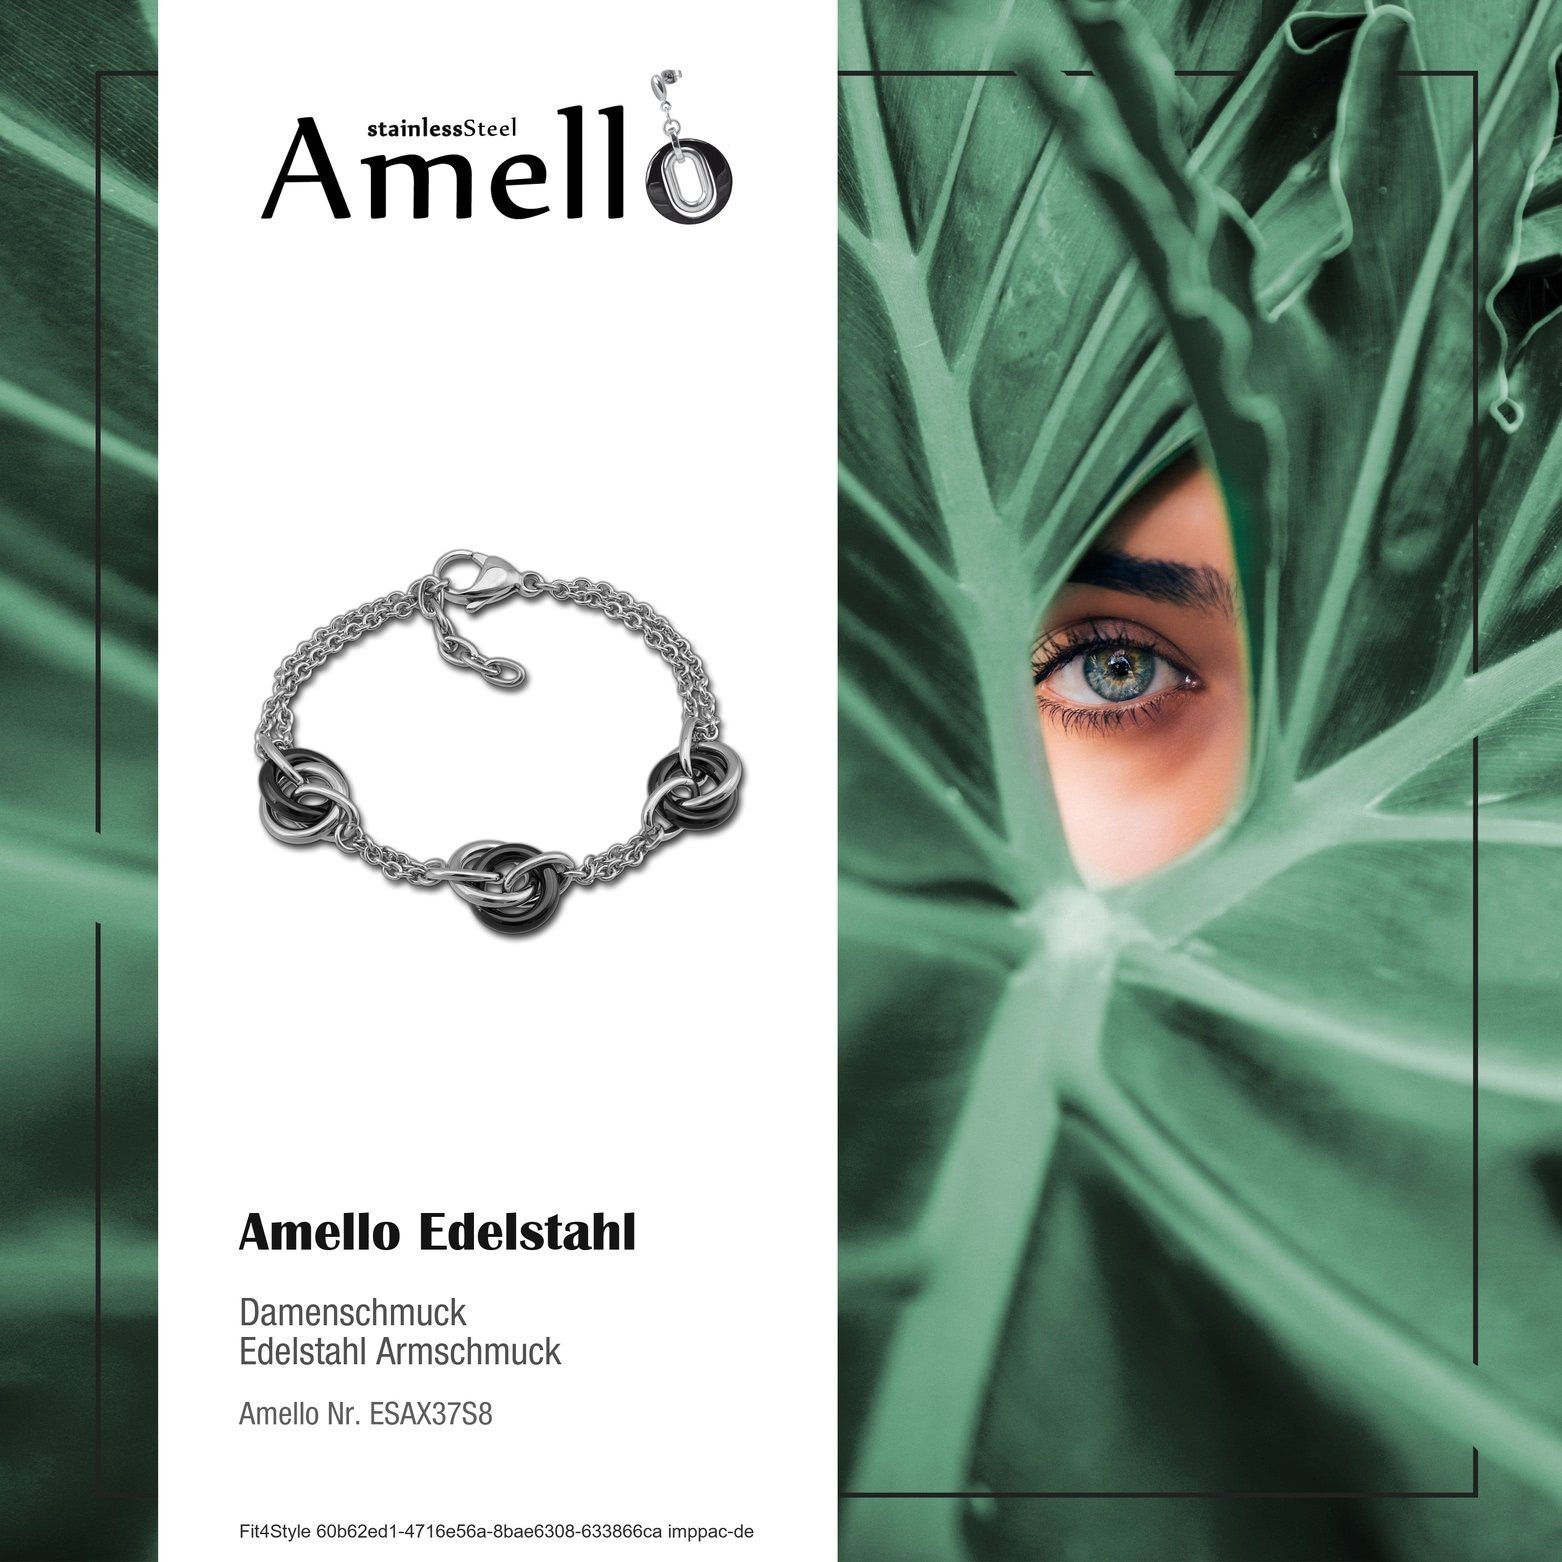 Amello Edelstahlarmband Amello Ringe Steel) Edelstahl für (Stainless (Armband), Armband Armbänder silber schwarz Damen